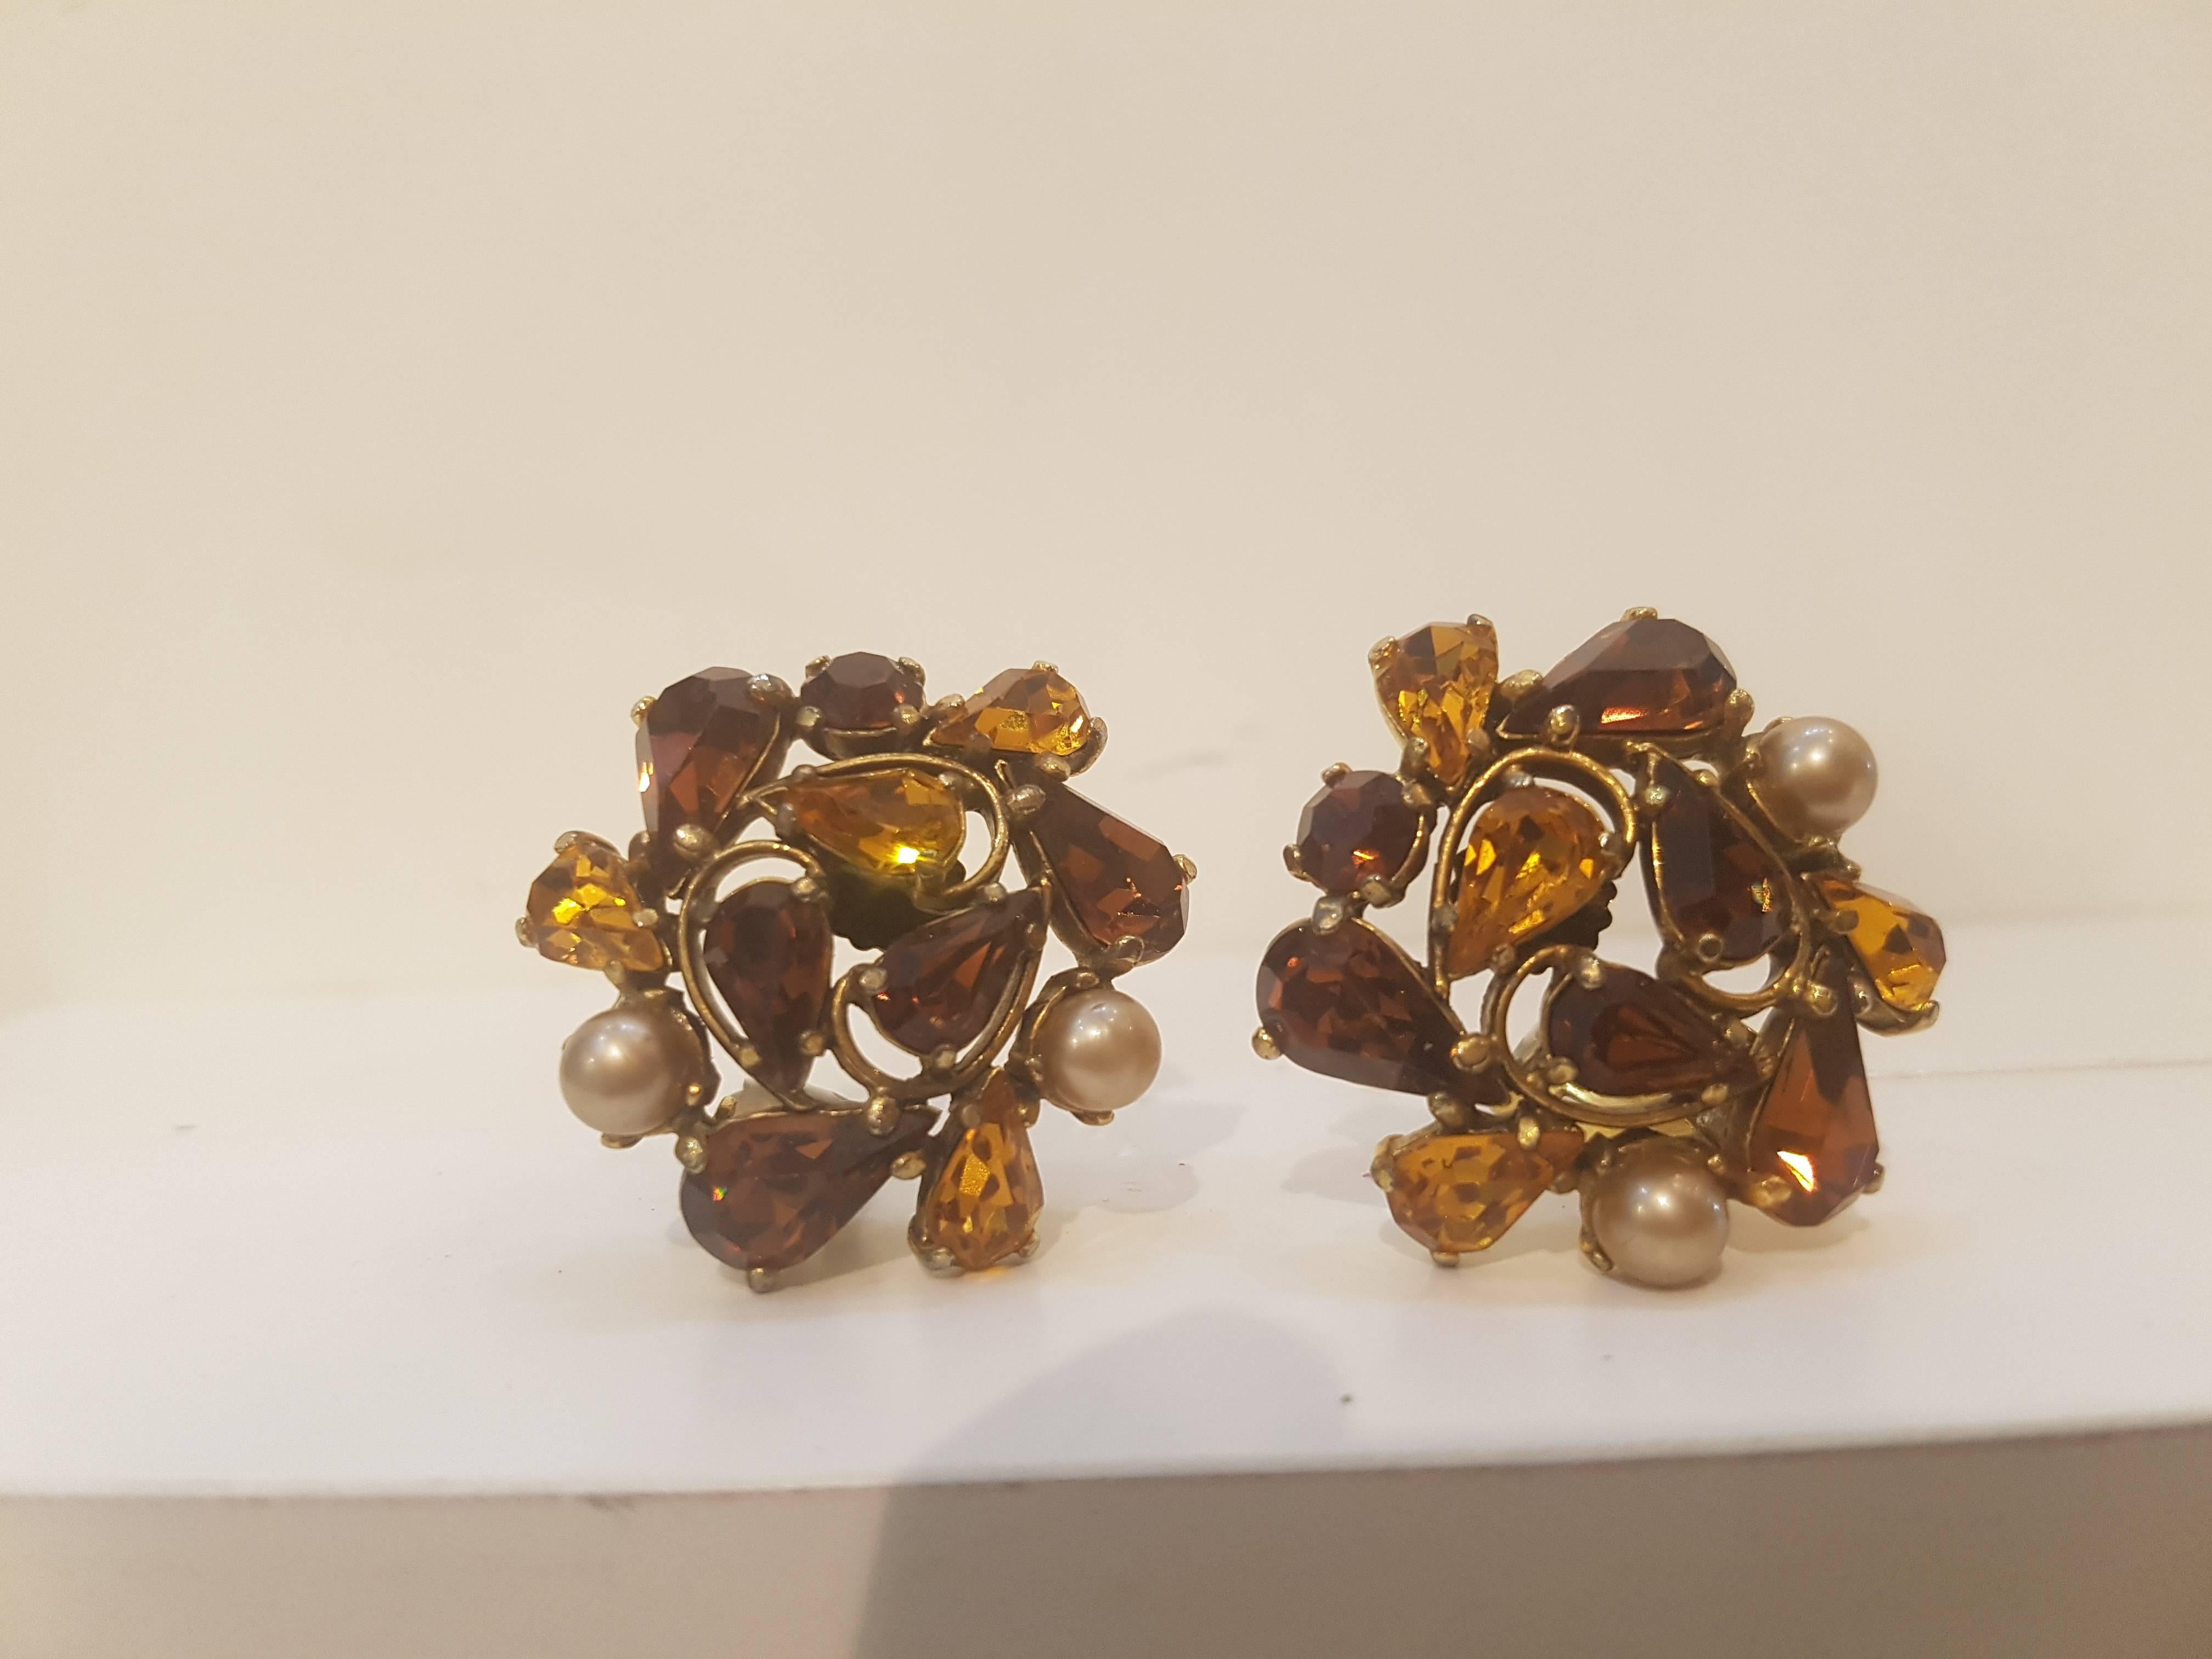 1980s Elsa Schiaparelli clip-on earrings
Gold tone hardware amber tone semipreciuous stone faux pearls
size 3.5 cm x 3.5 cm